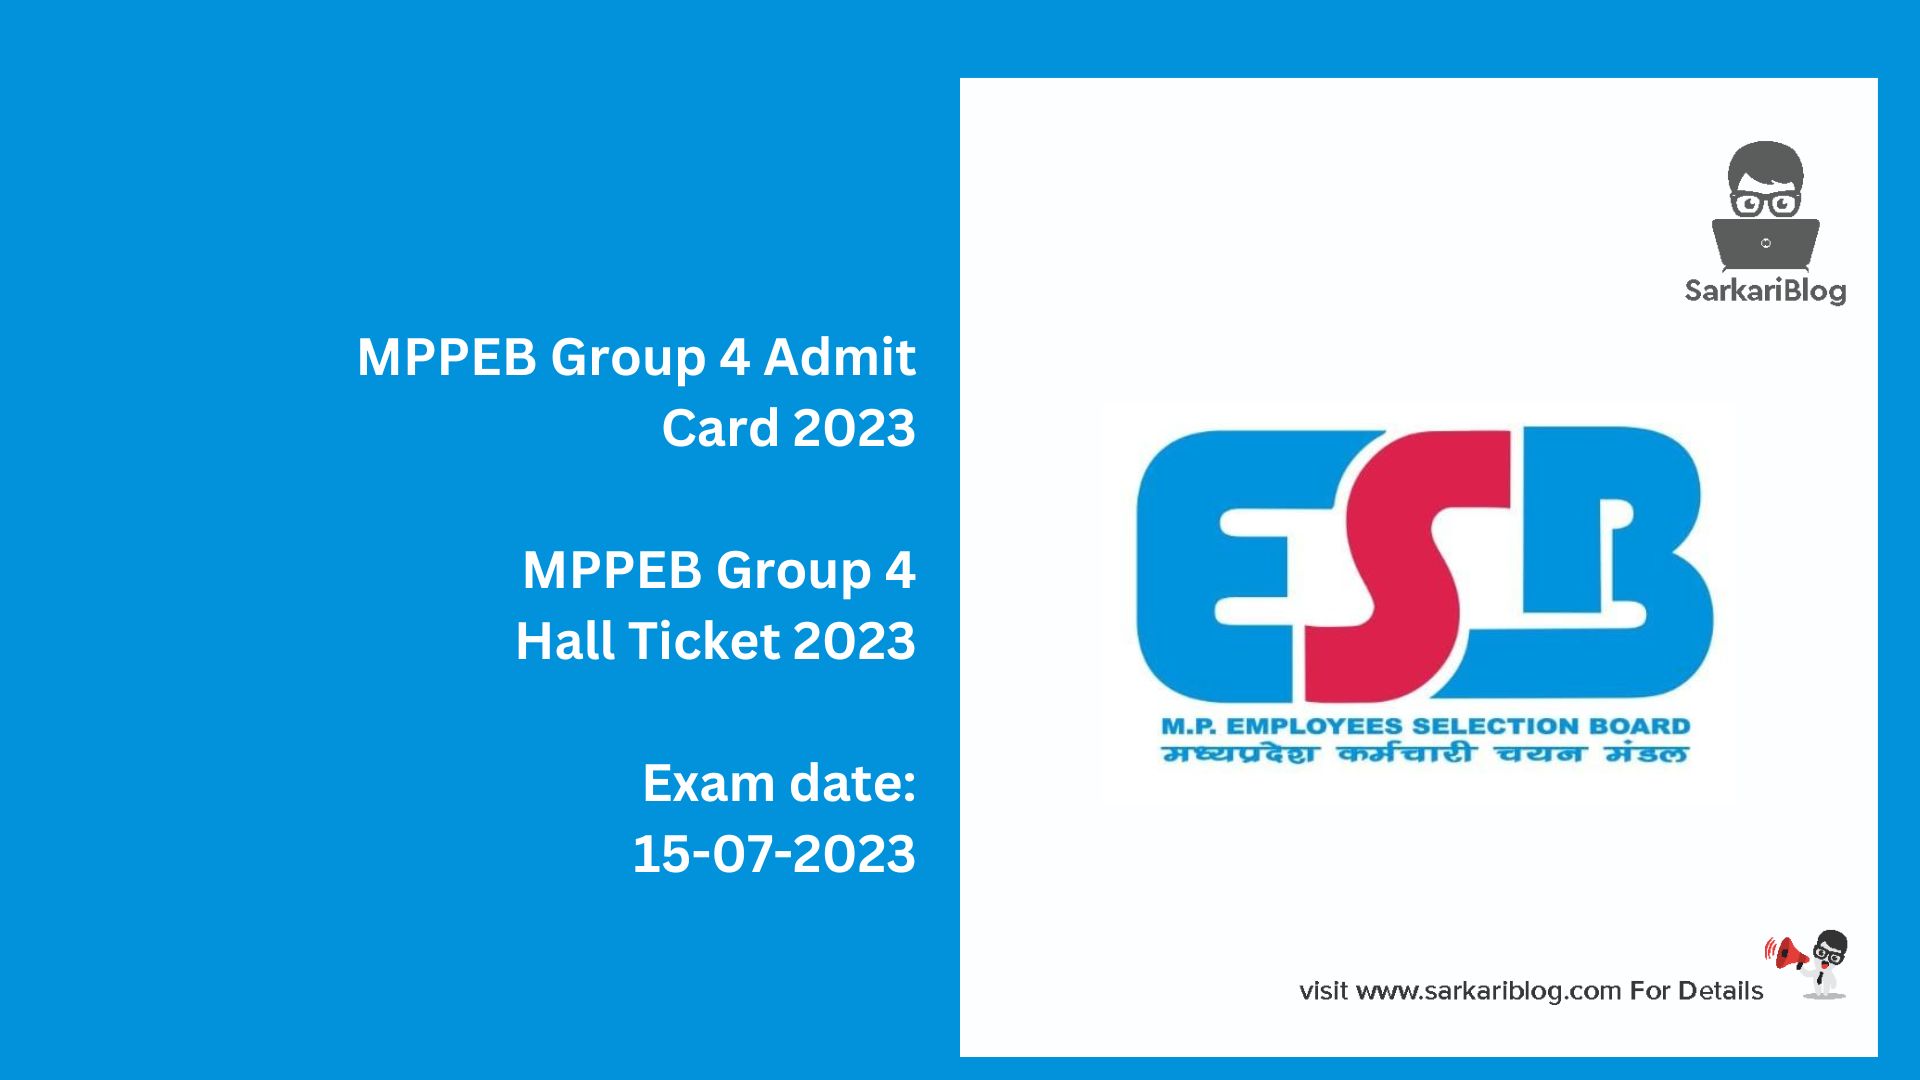 MPPEB Group 4 Admit Card 2023